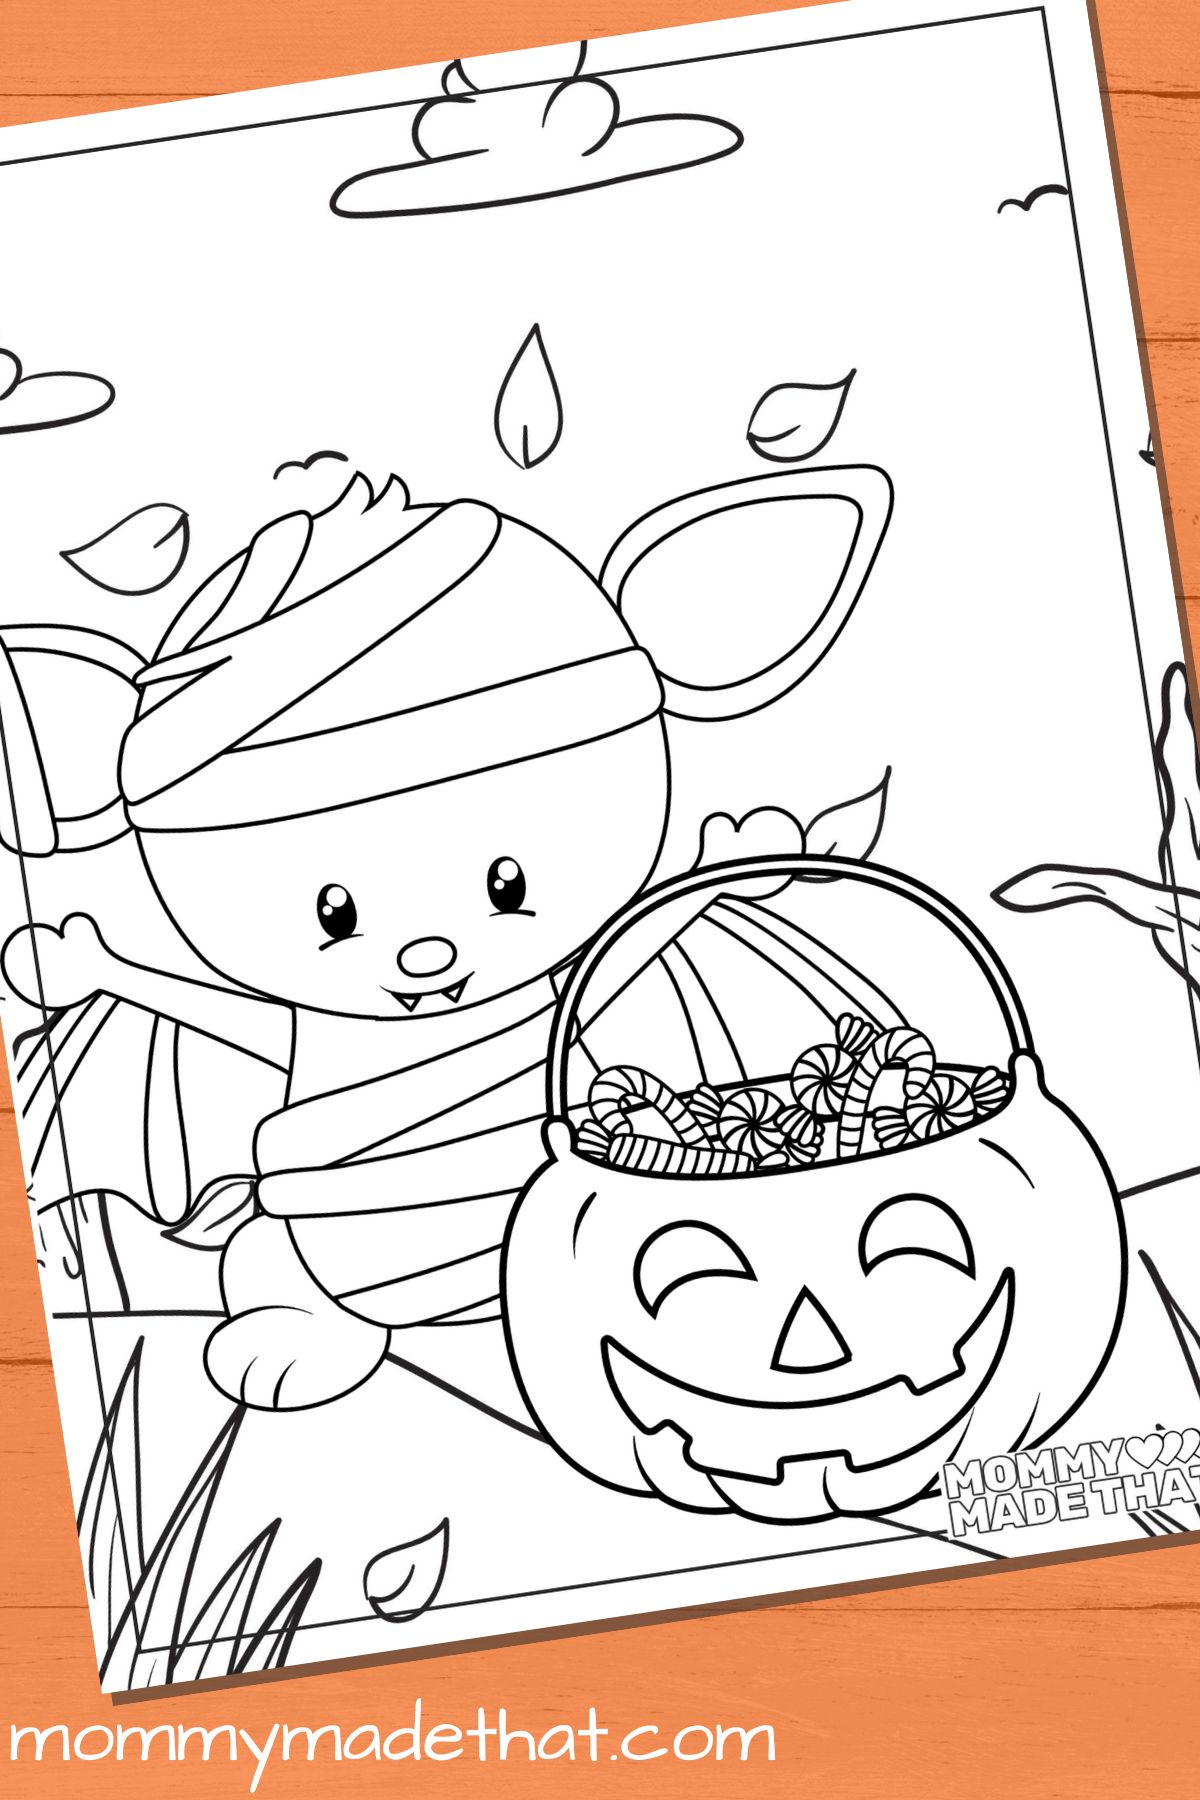 Jack O Lantern coloring page for kids